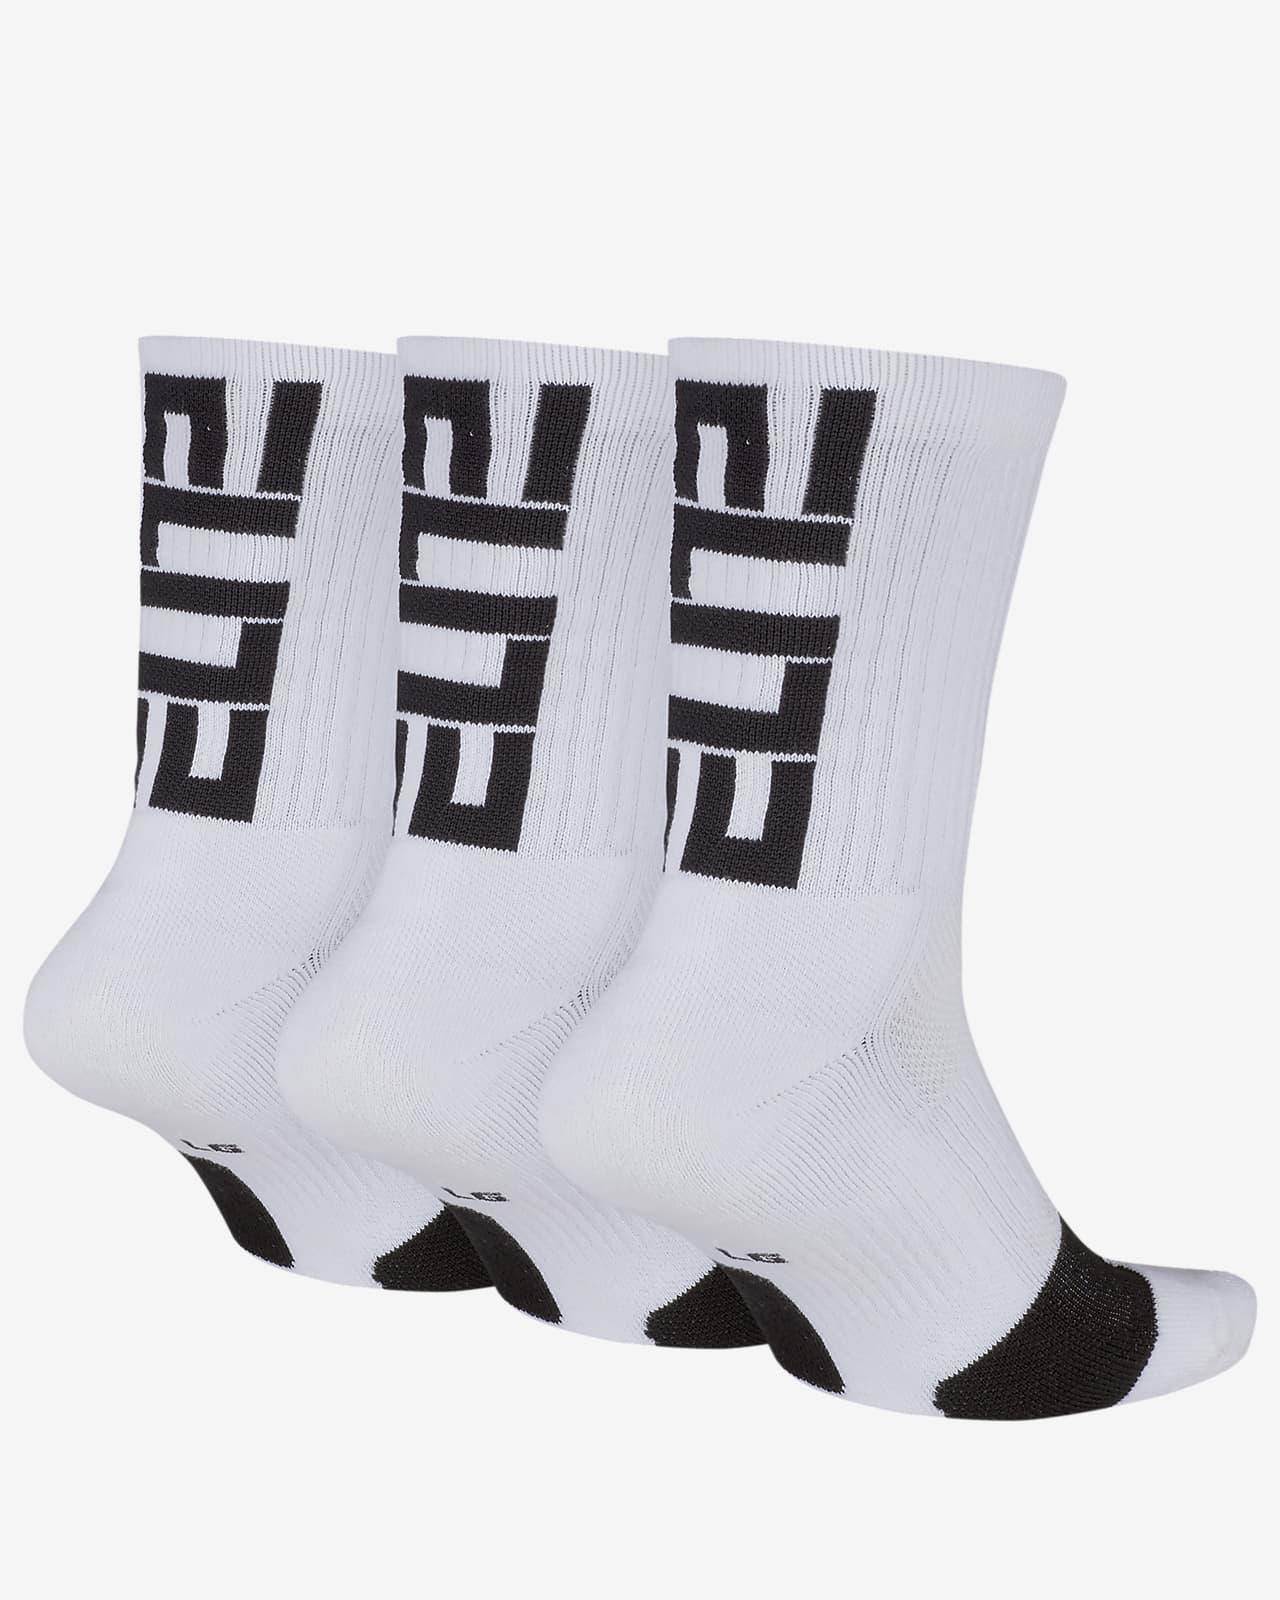 nike elite socks near me